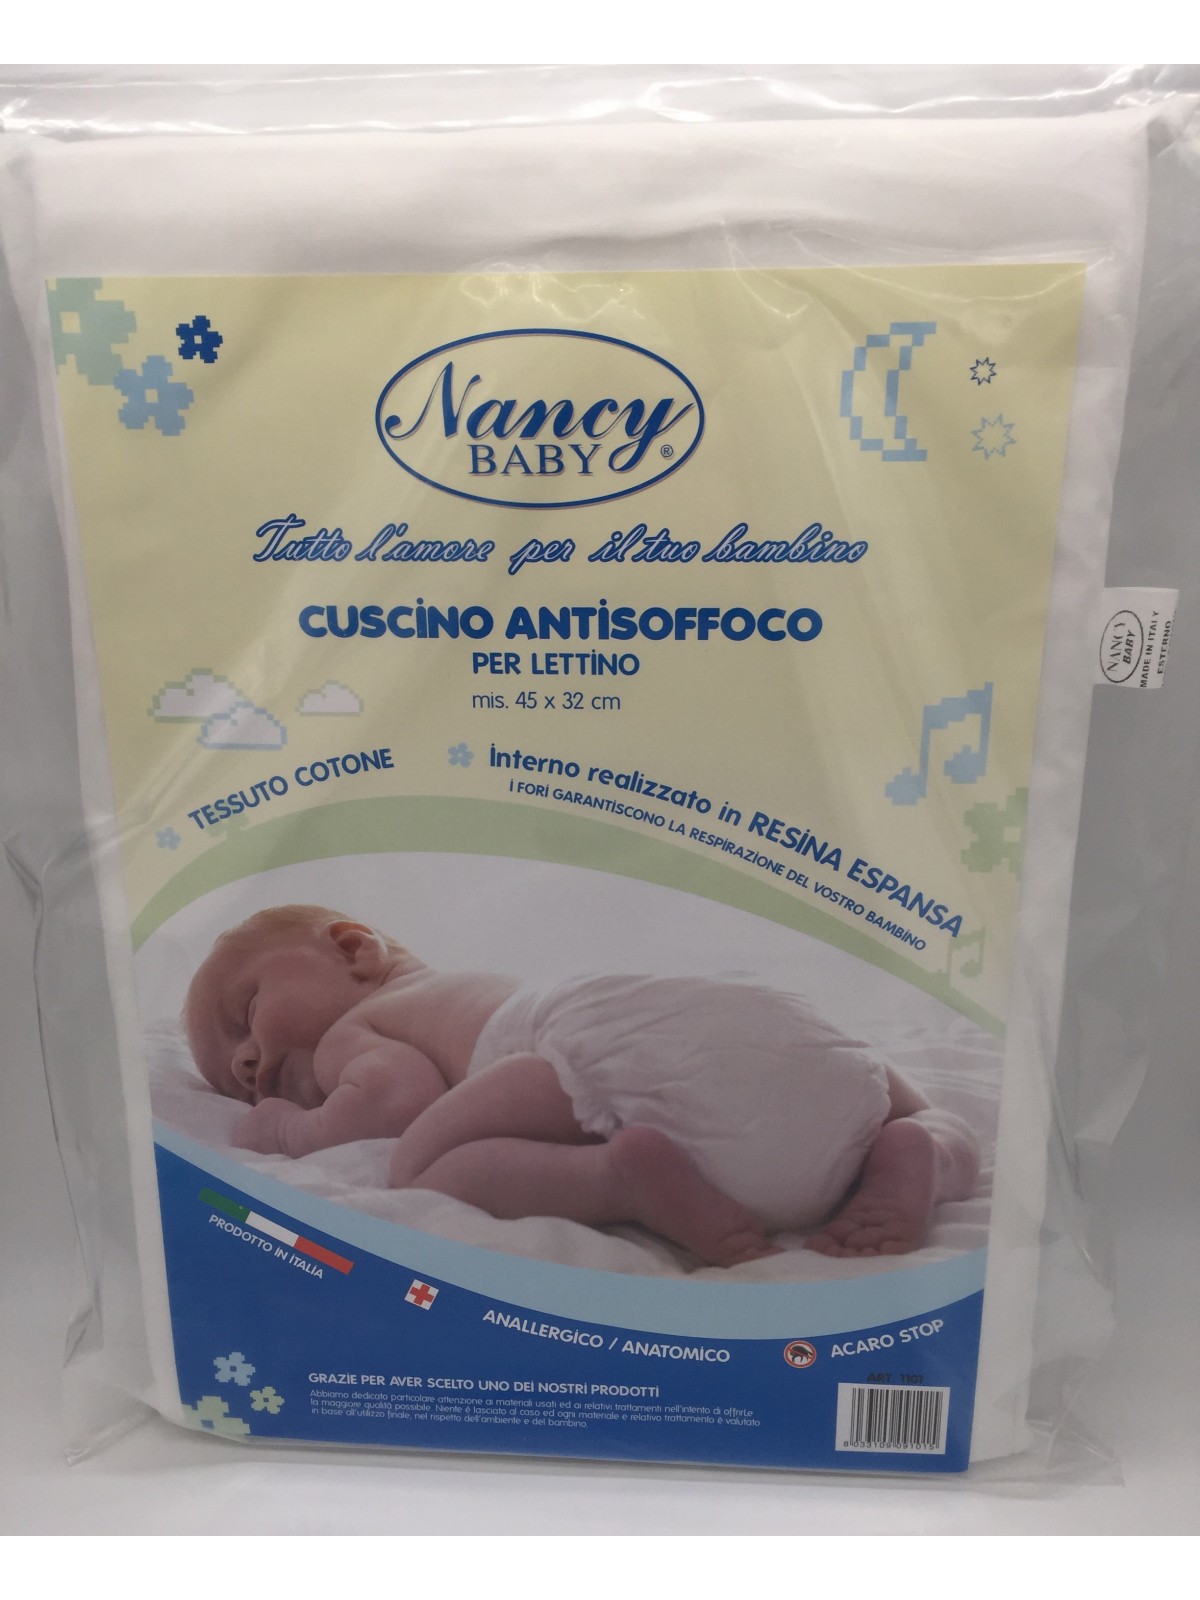 Vendita CUSCINO ANTISOFFOCO NEONATO CARROZZINO NANCY BABY